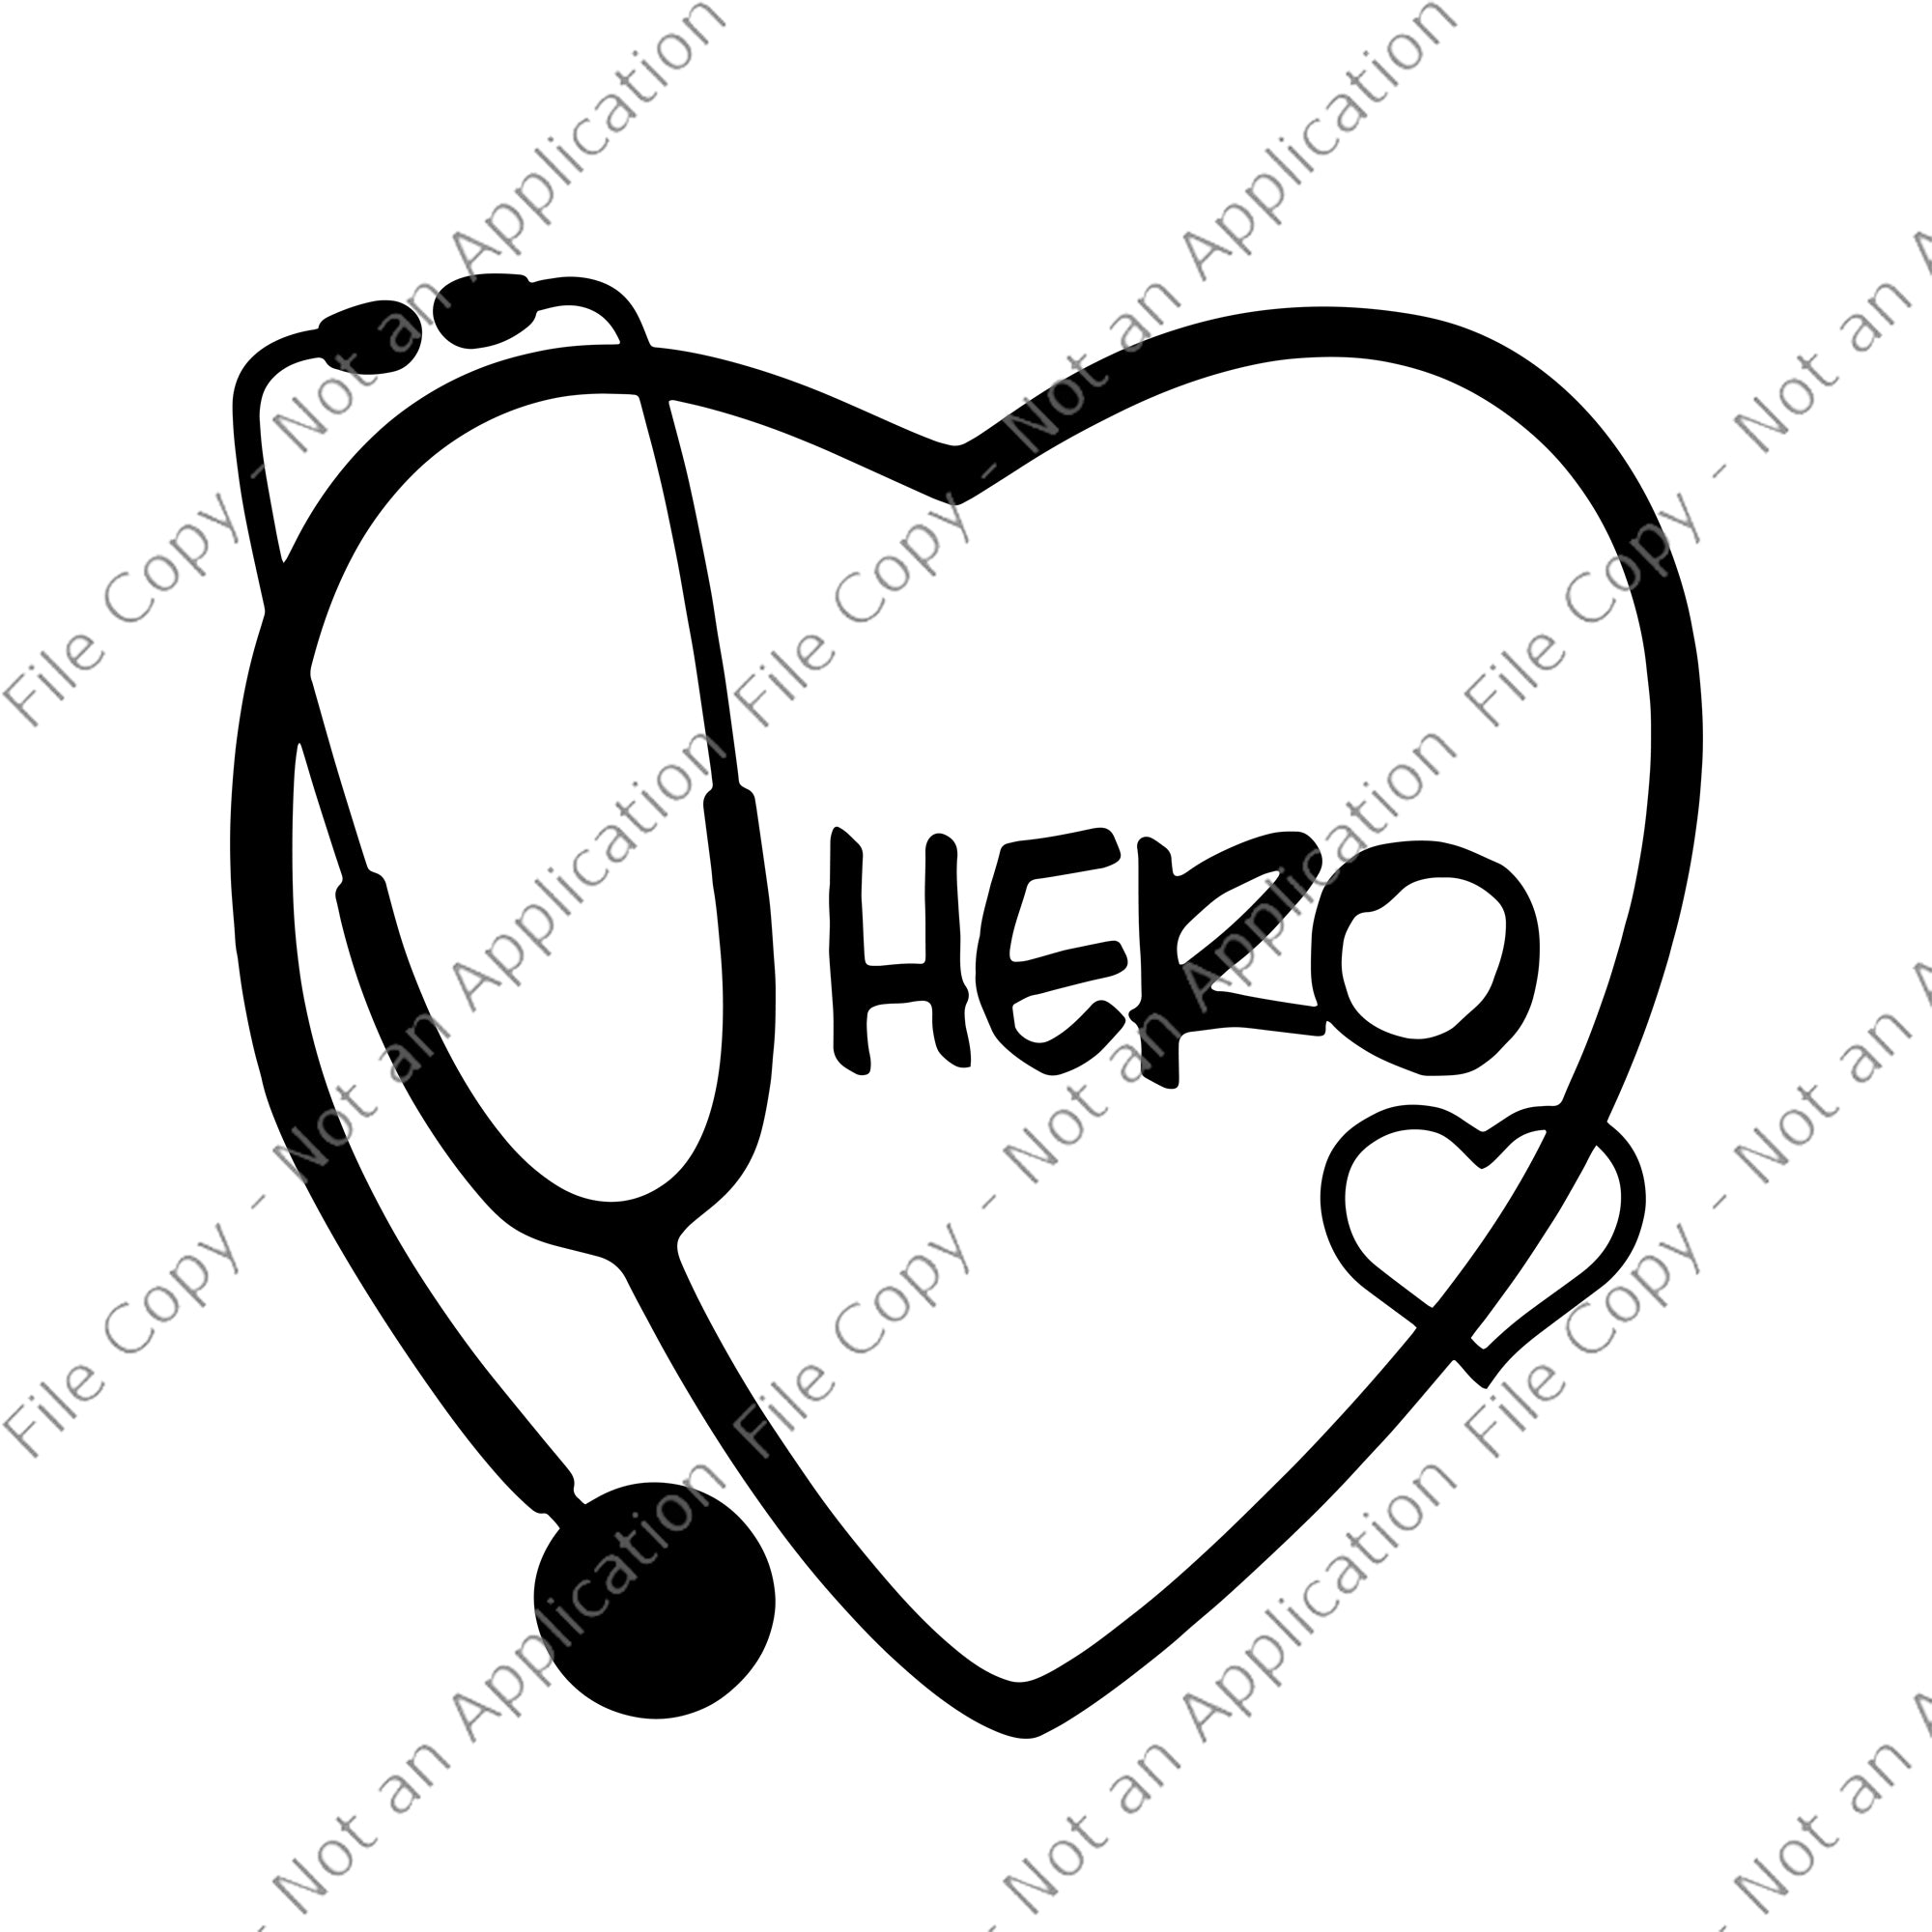 Nurse Hero Svg Nurse Hero Nurse Hero Png Nurse Hero Design Nurse 2 Buydesigntshirt